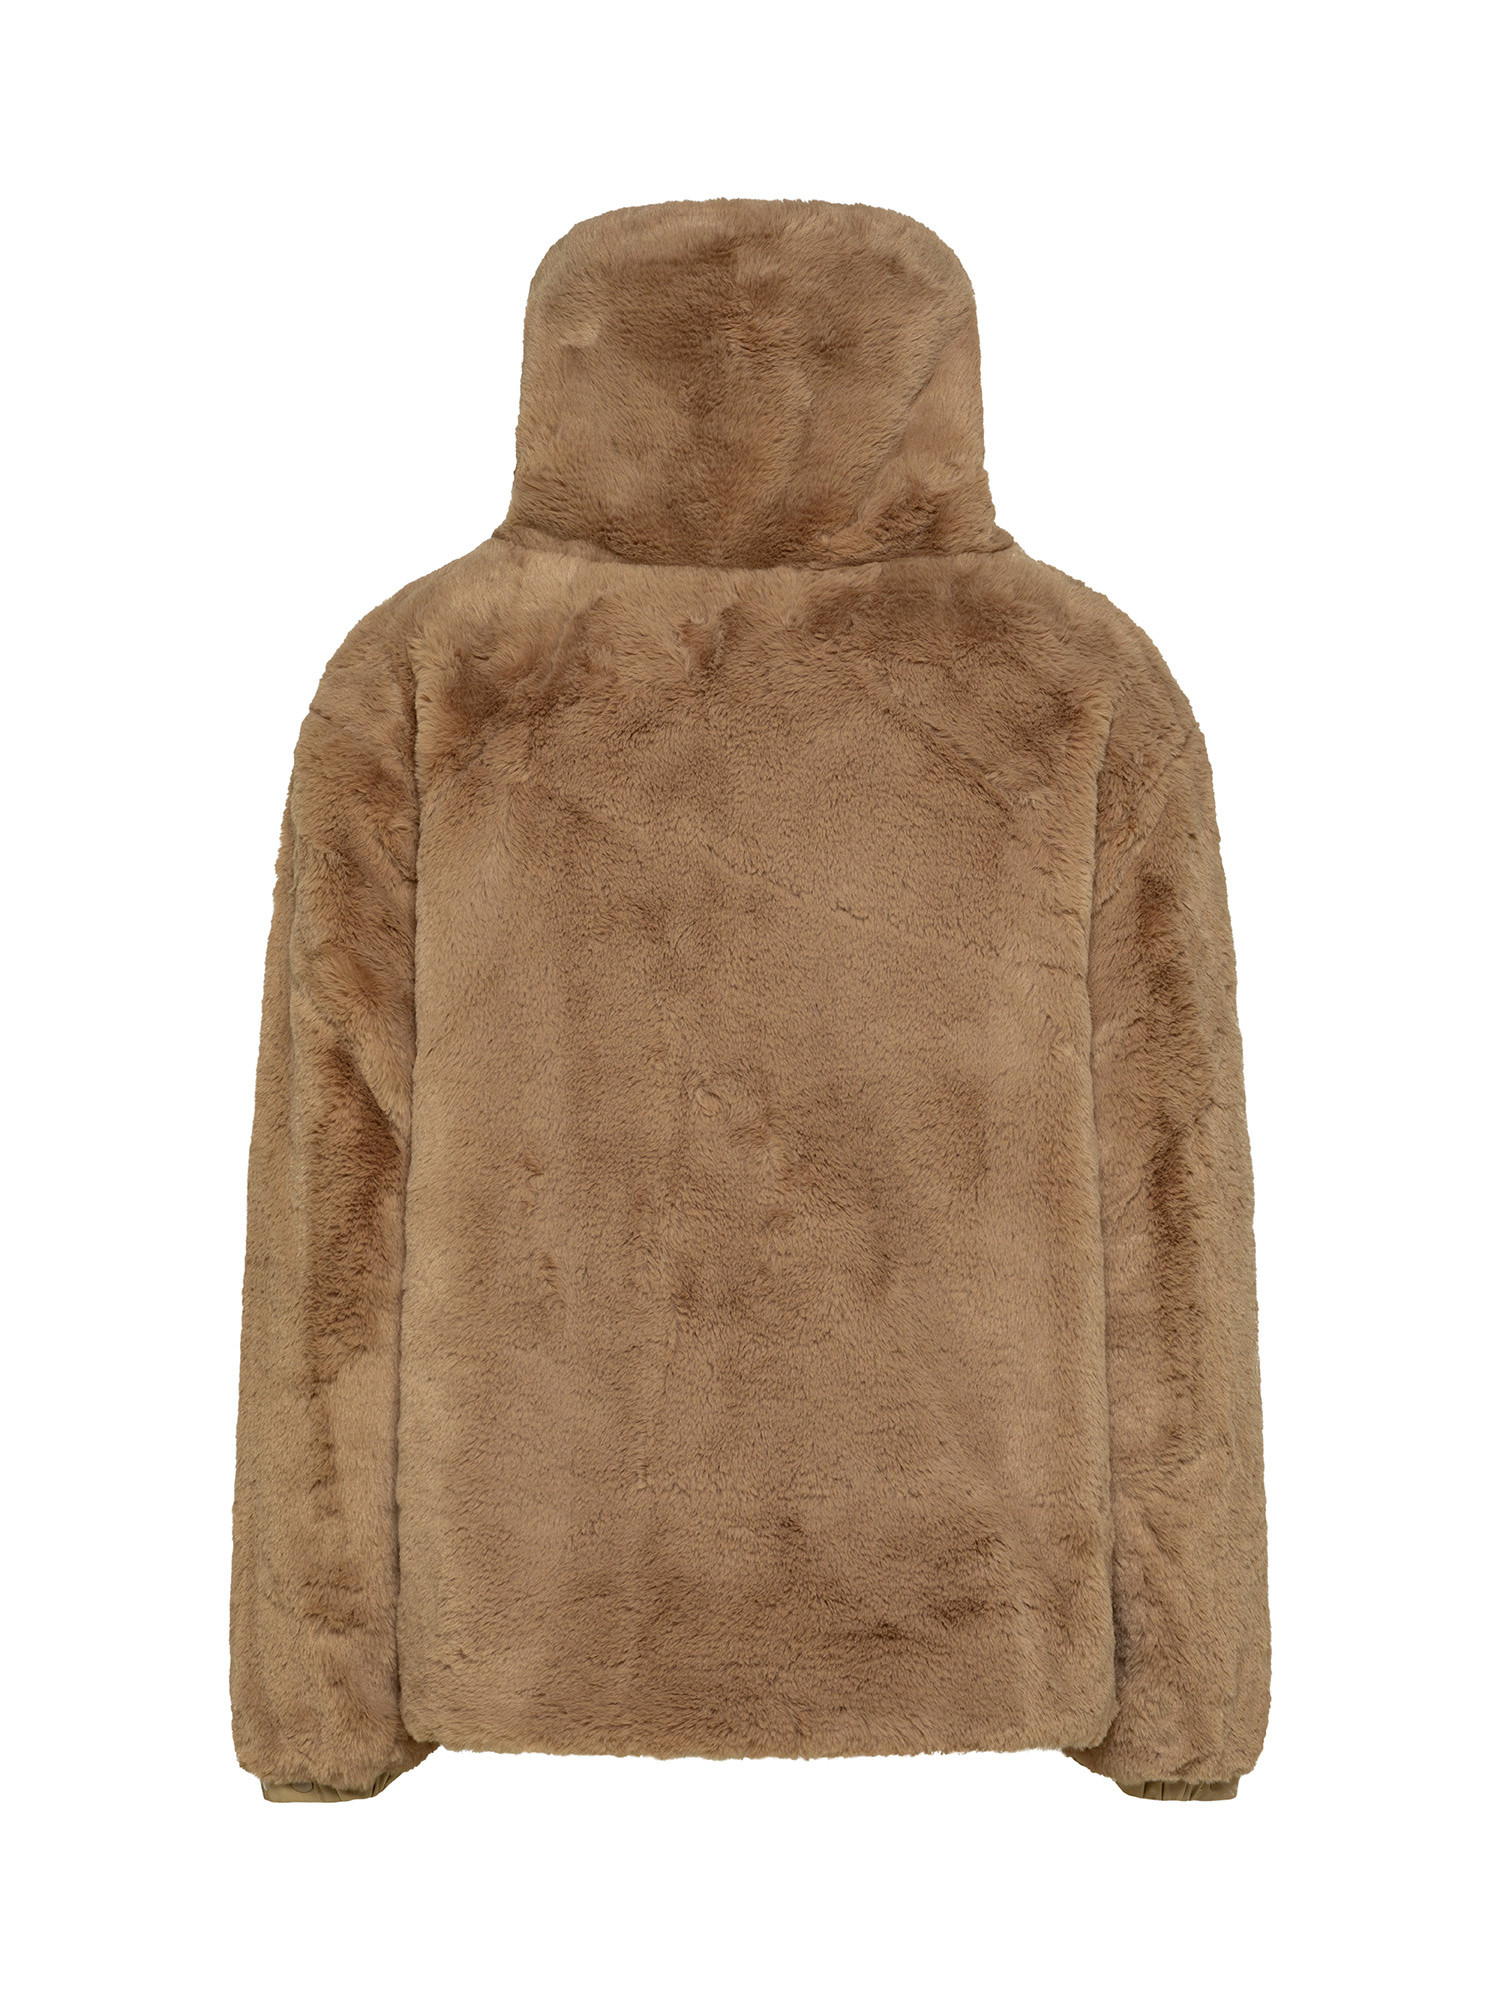 Koan - Reversible jacket, Beige, large image number 1